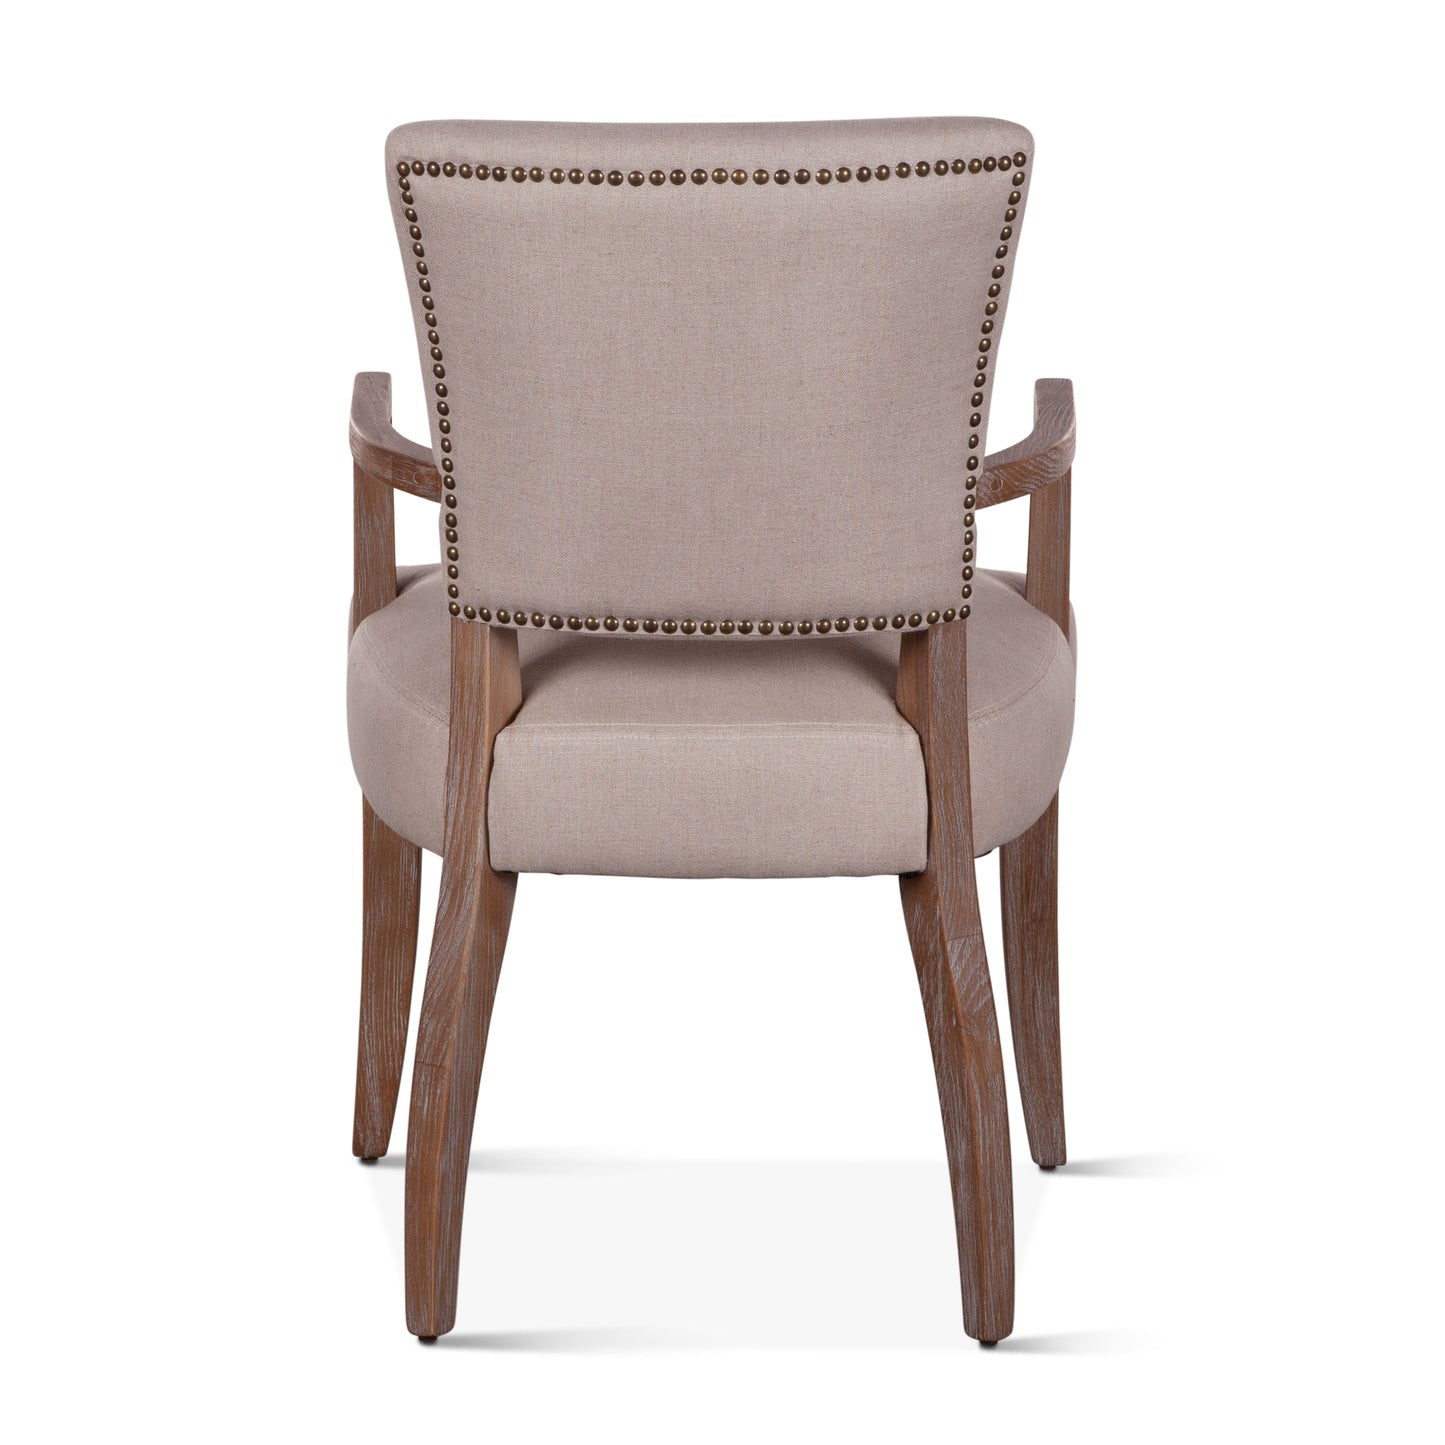 Minday Arm Chair Natural Linen G201-413-810-90